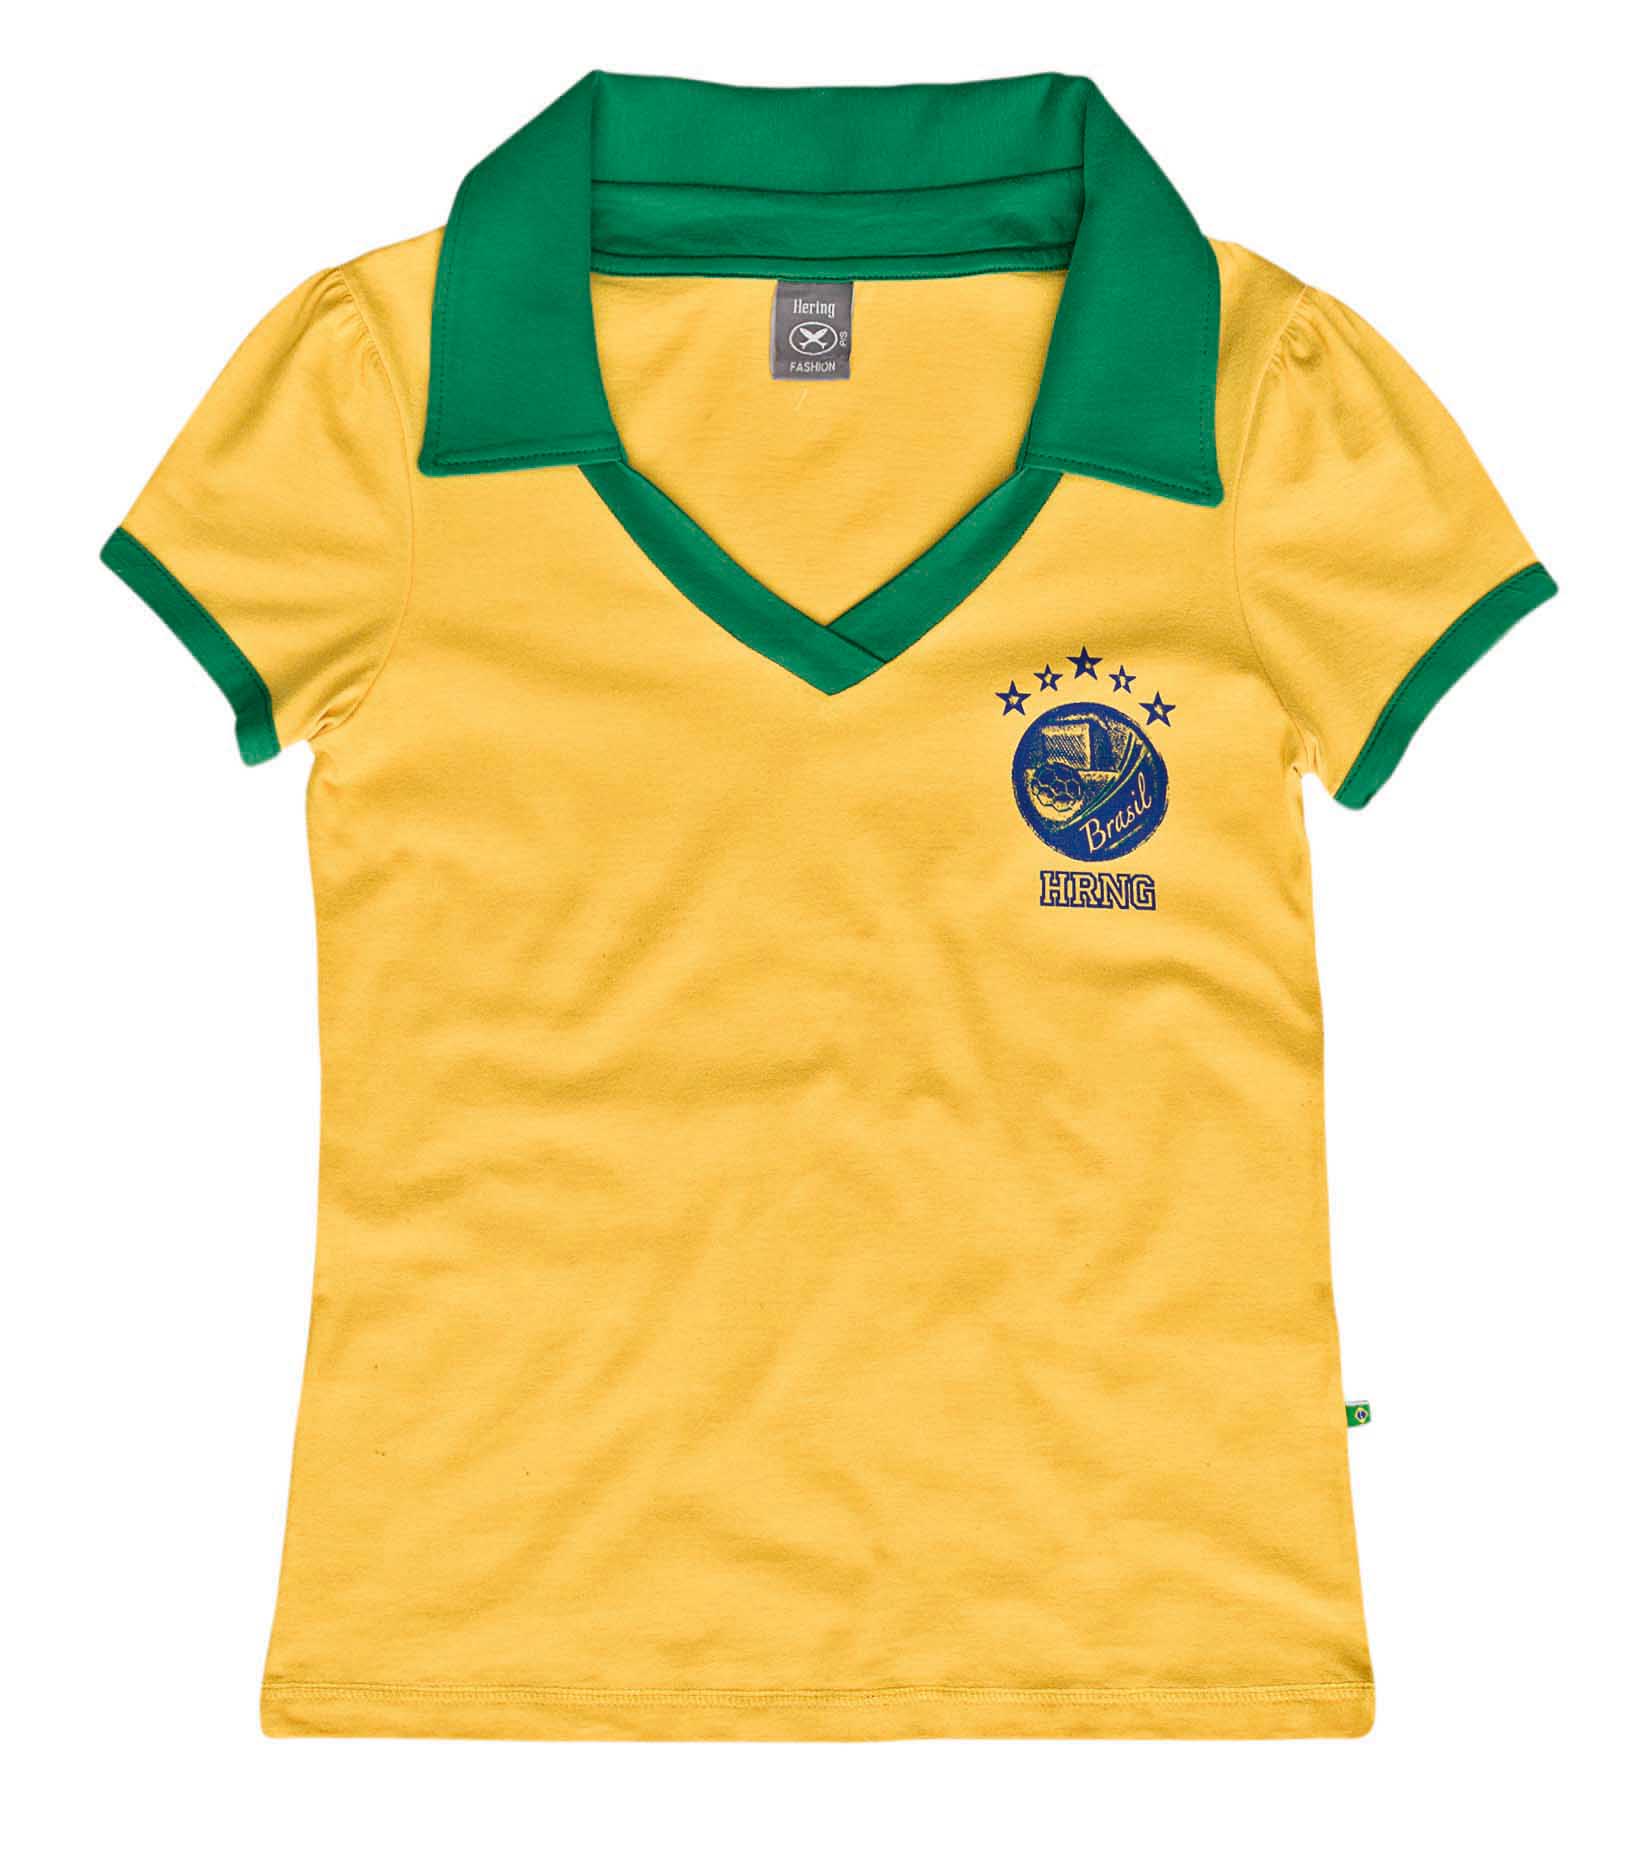 Camiseta polo verde e amarela do Brasil.